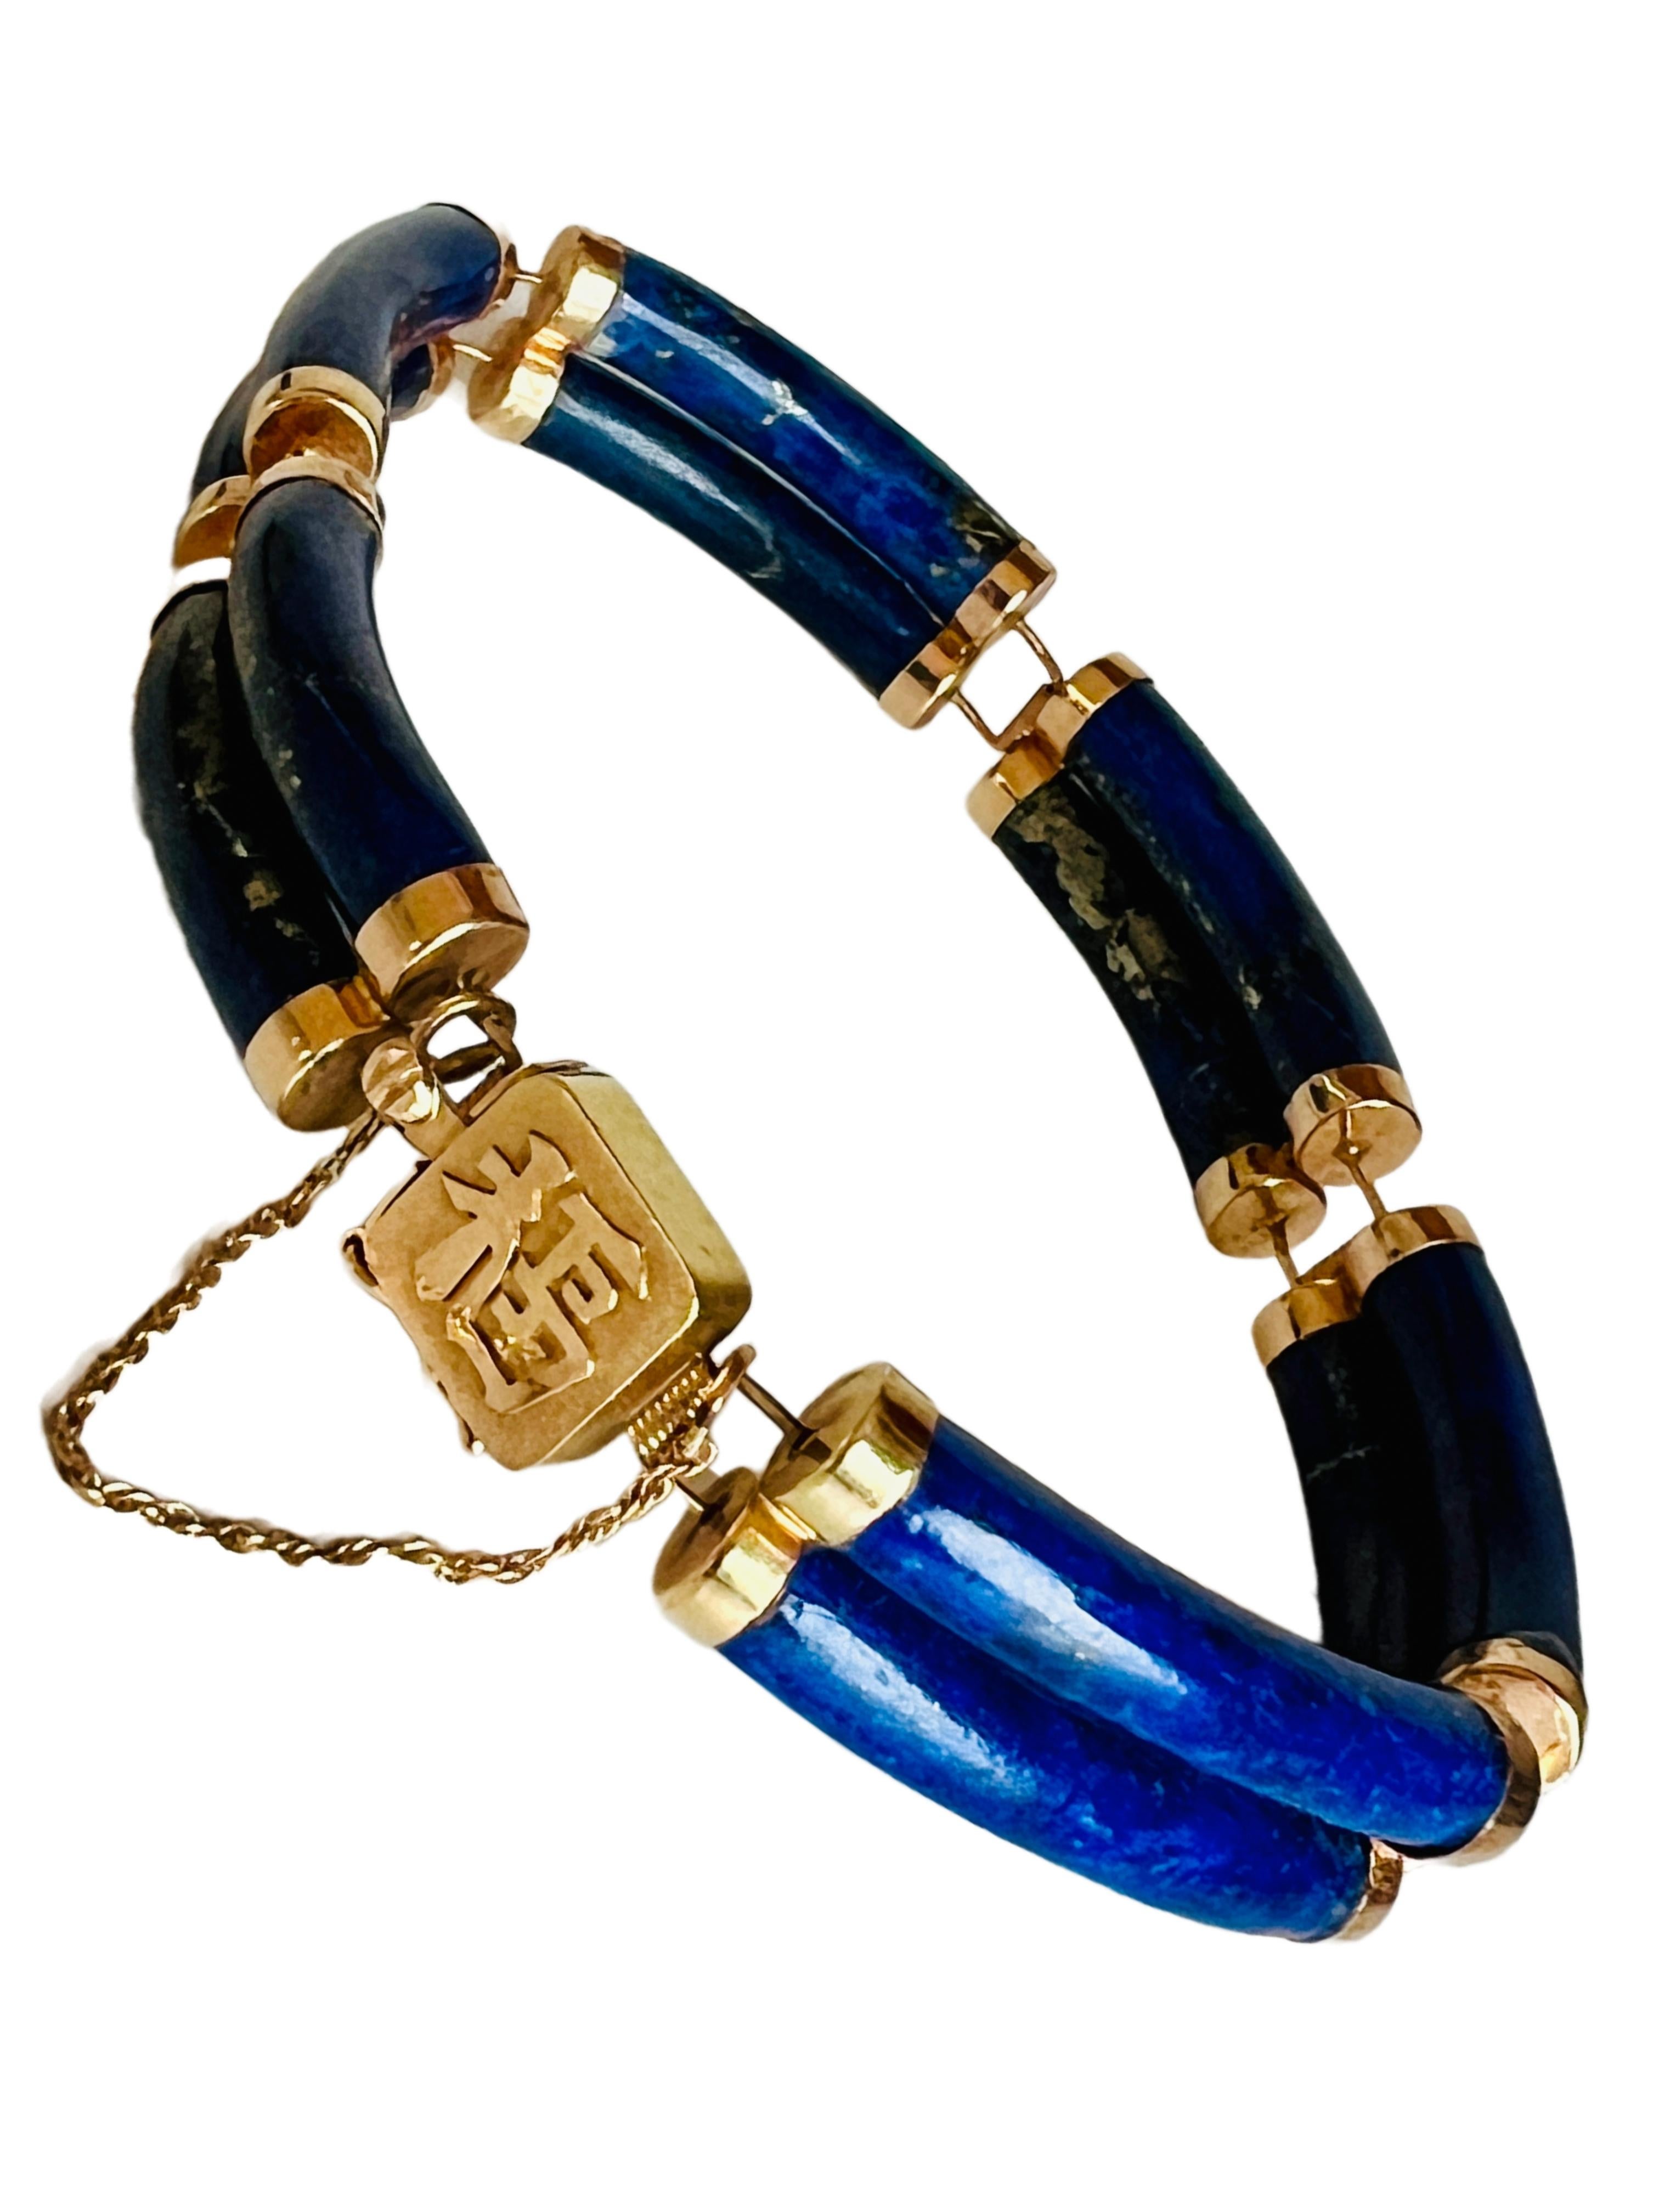 Vintage 14k Lapis Lazuli Two Bar Link Station Bracelet Chinese Good Luck Fortune For Sale 2